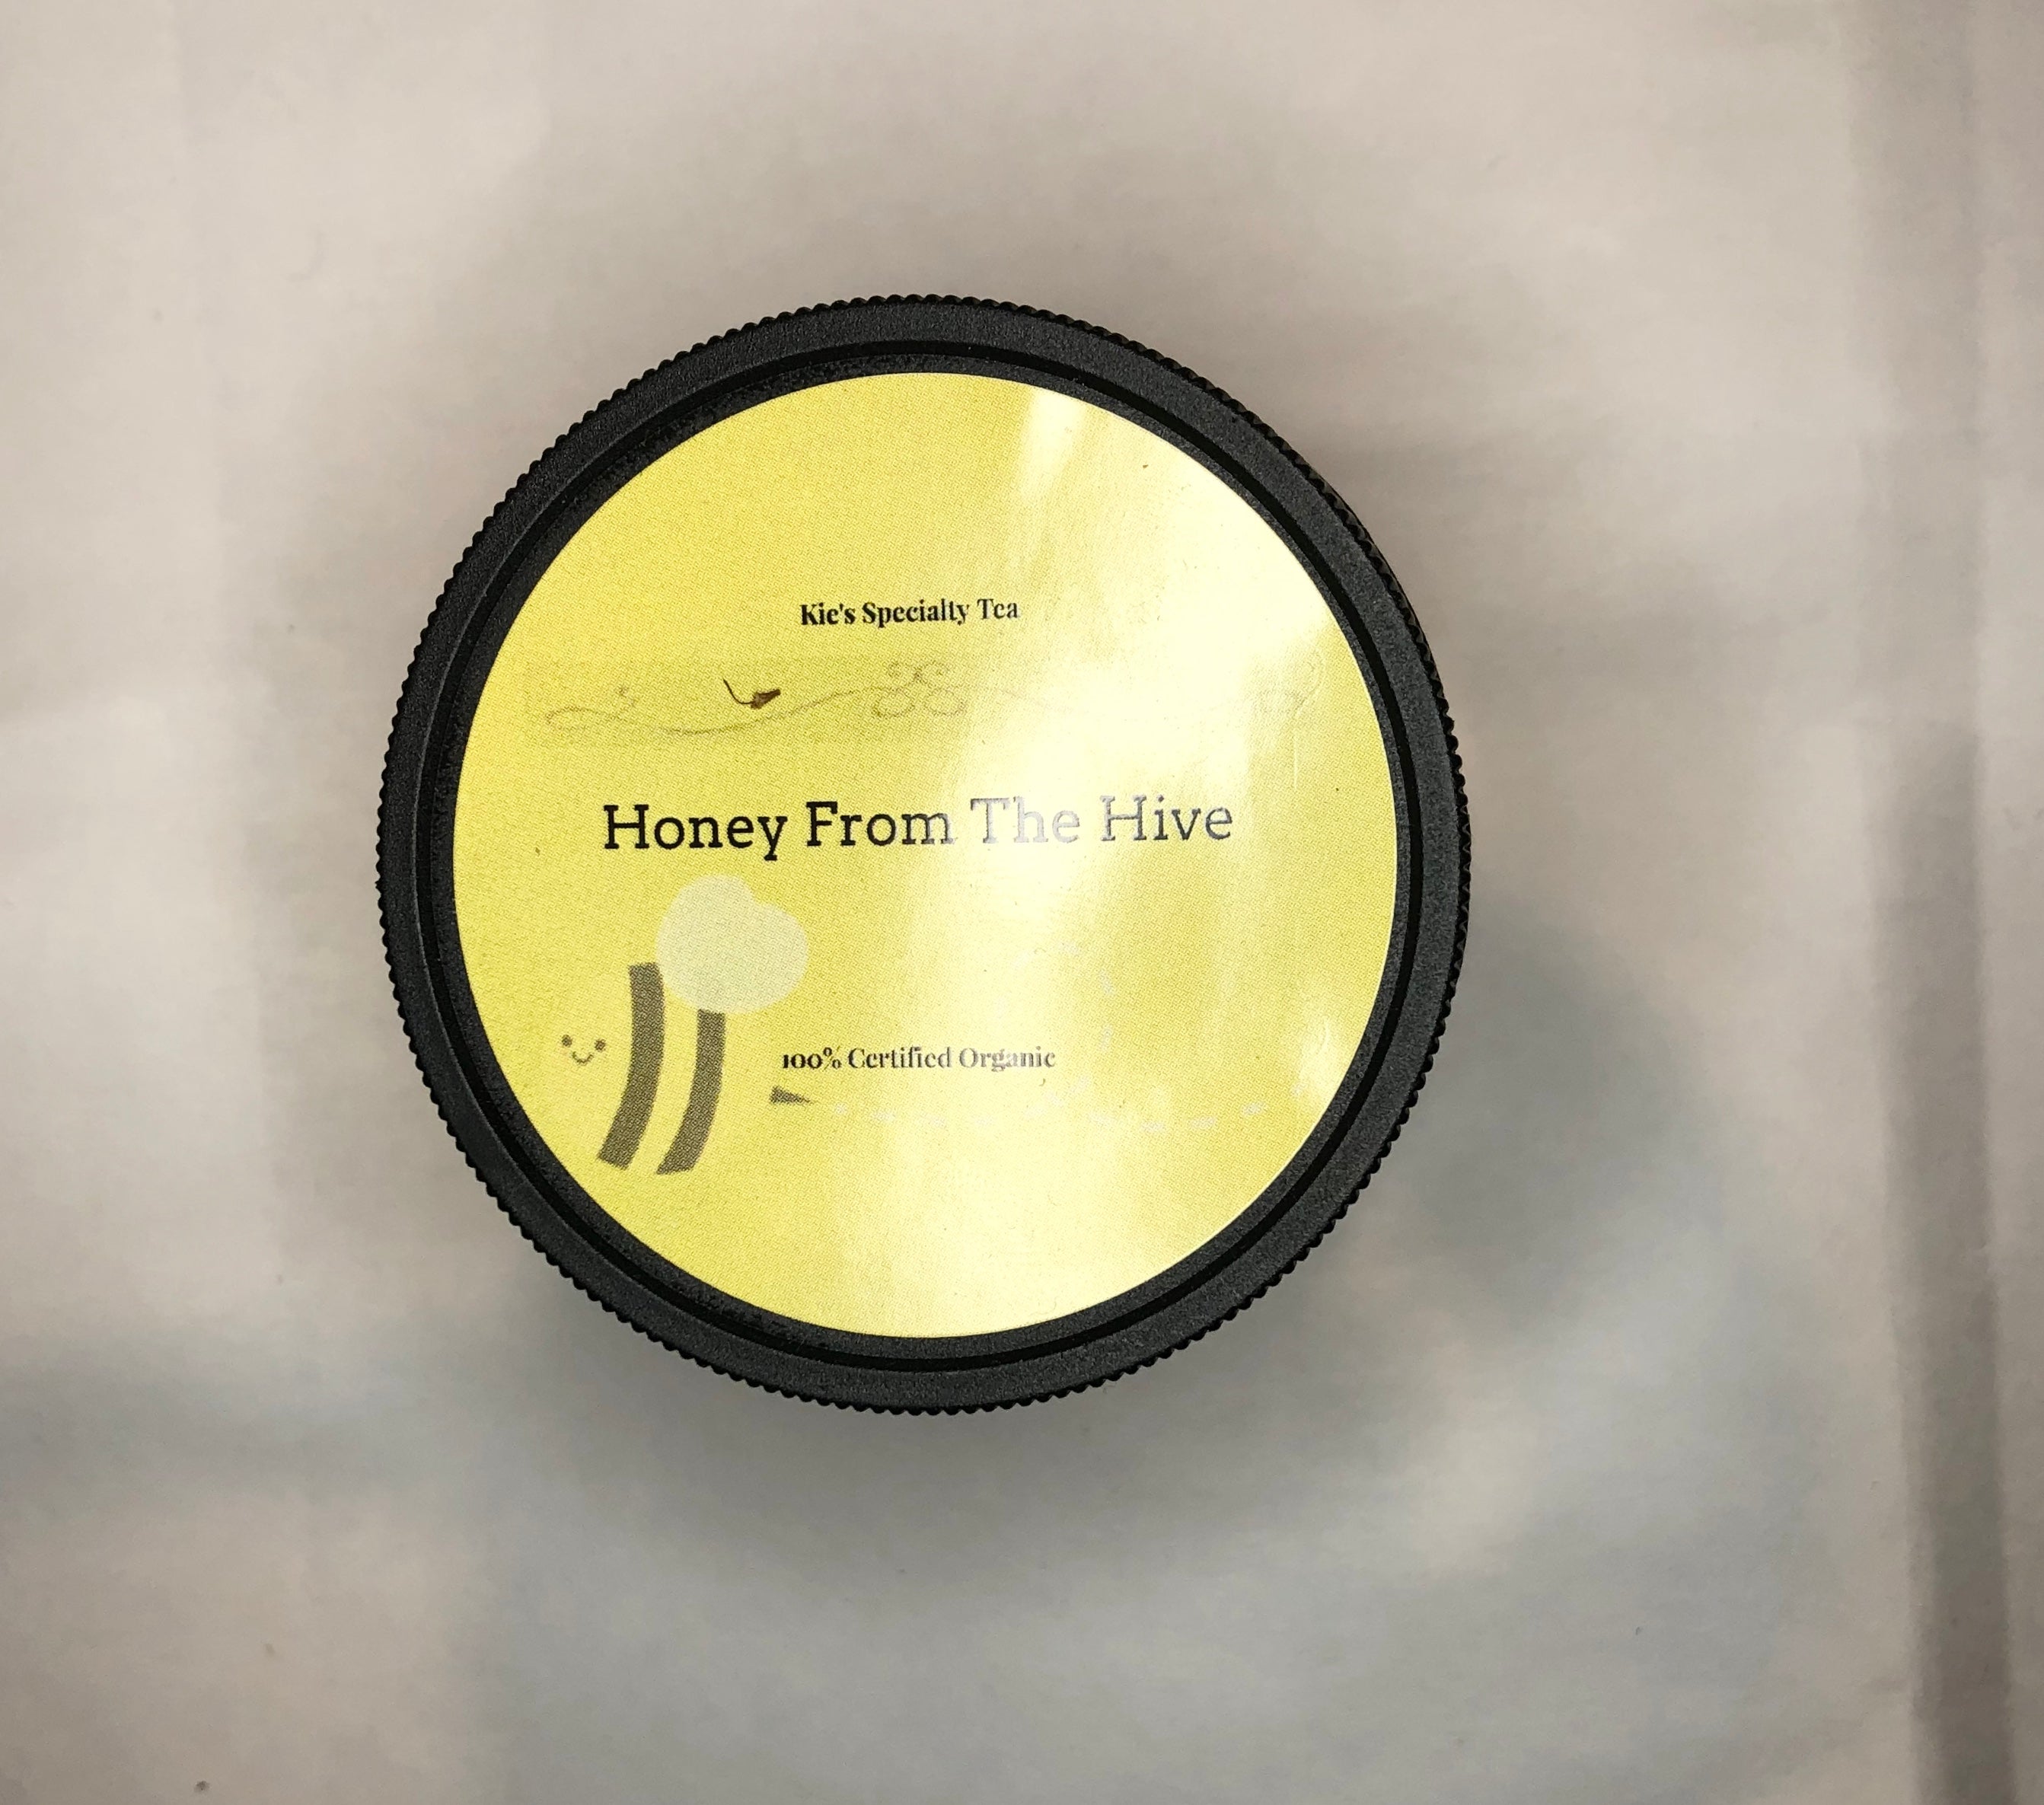 Kie's Specialty Tea No Additives Creamy Organic Honey From The Hive